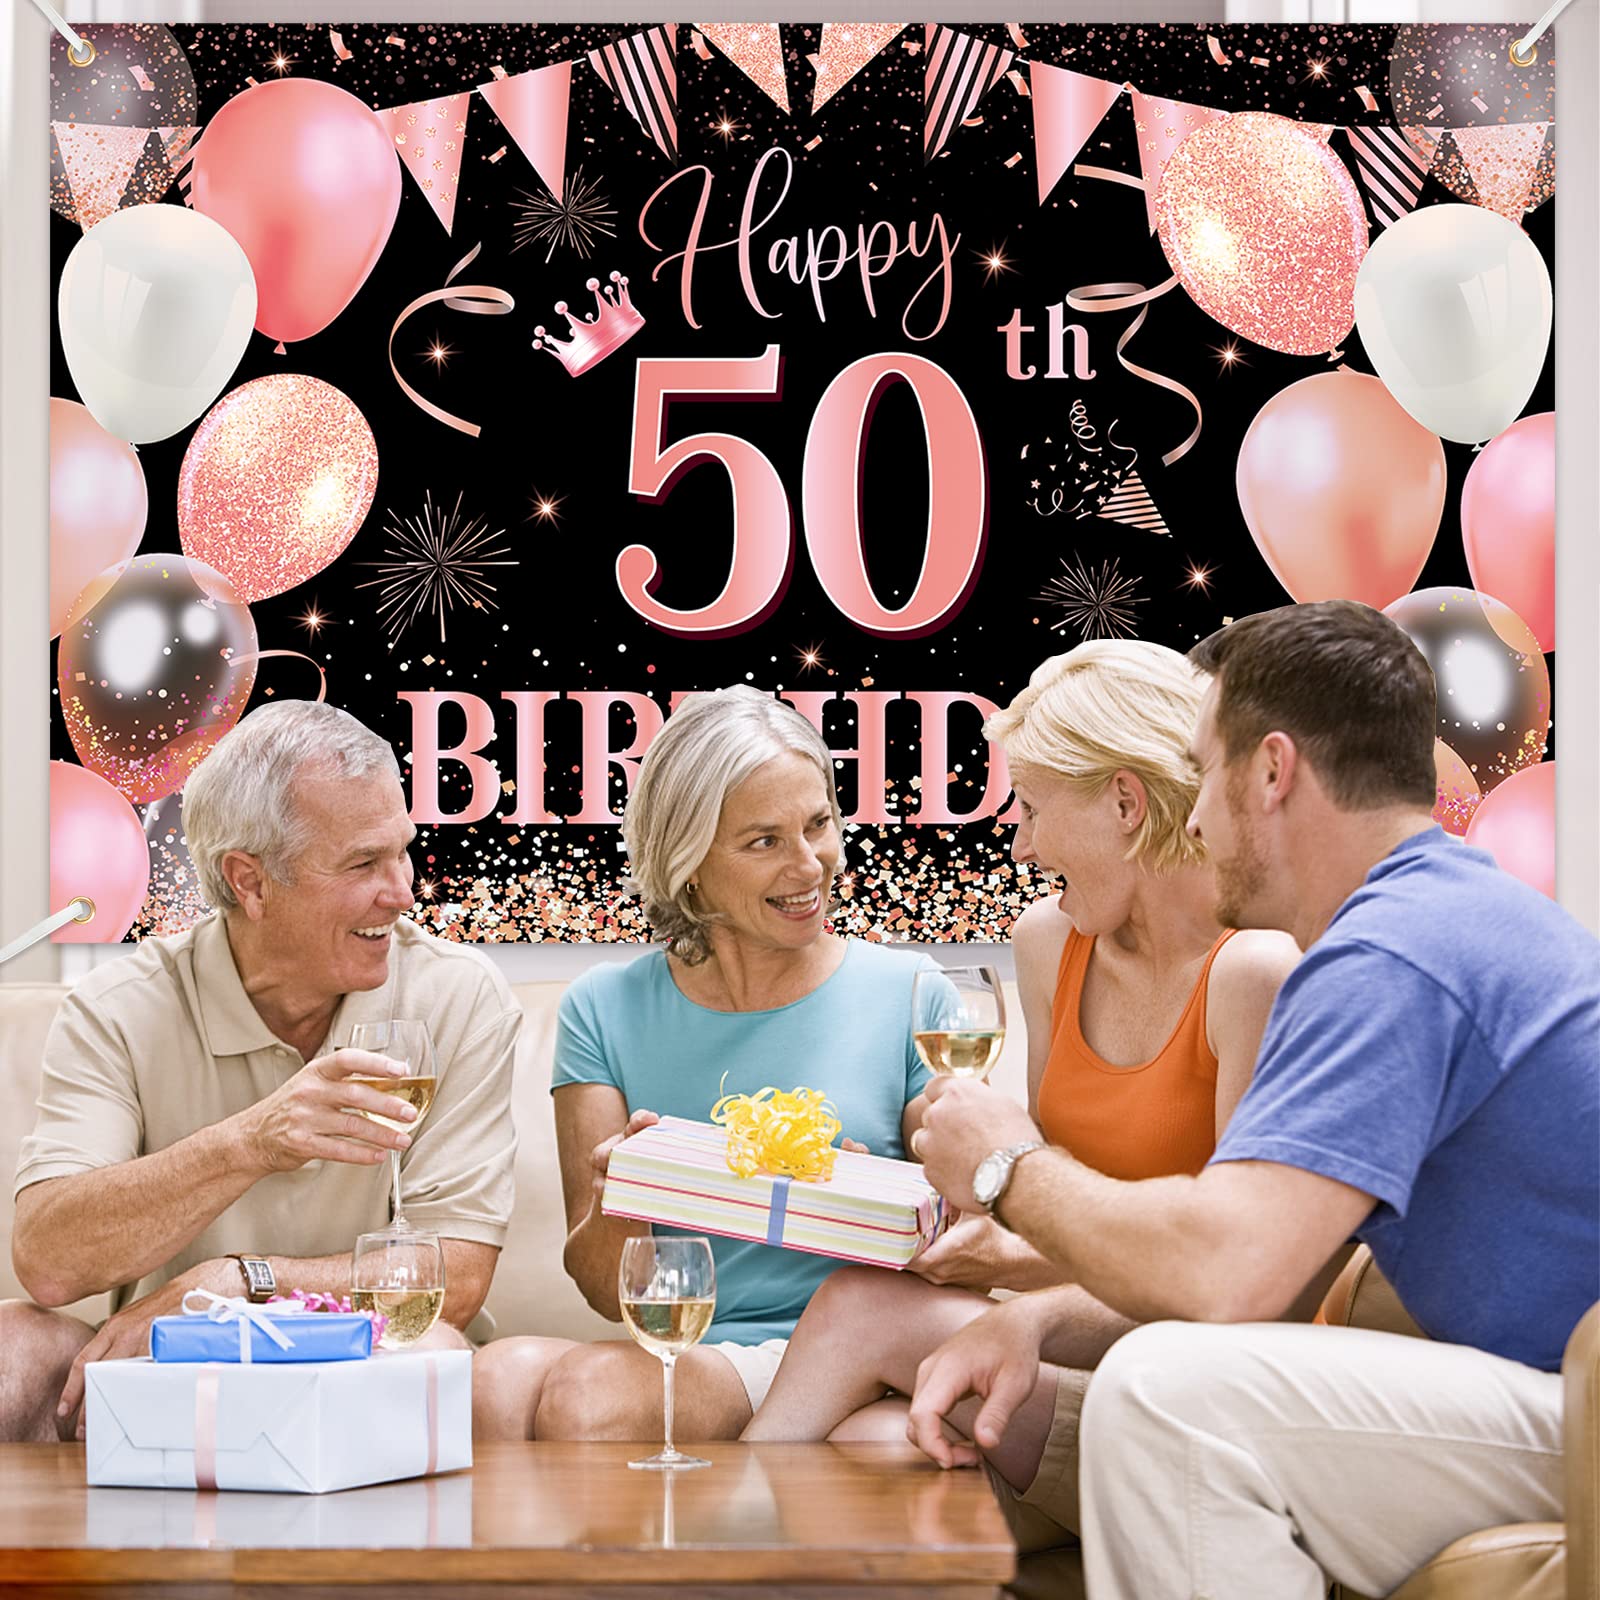 50th Birthday Backdrop Banner,BTZO Happy 50th Birthday Decorations,Rose Gold Black Fabric Photo Backdrop Background for Men and Women 50th Birthday Party,180×110cm